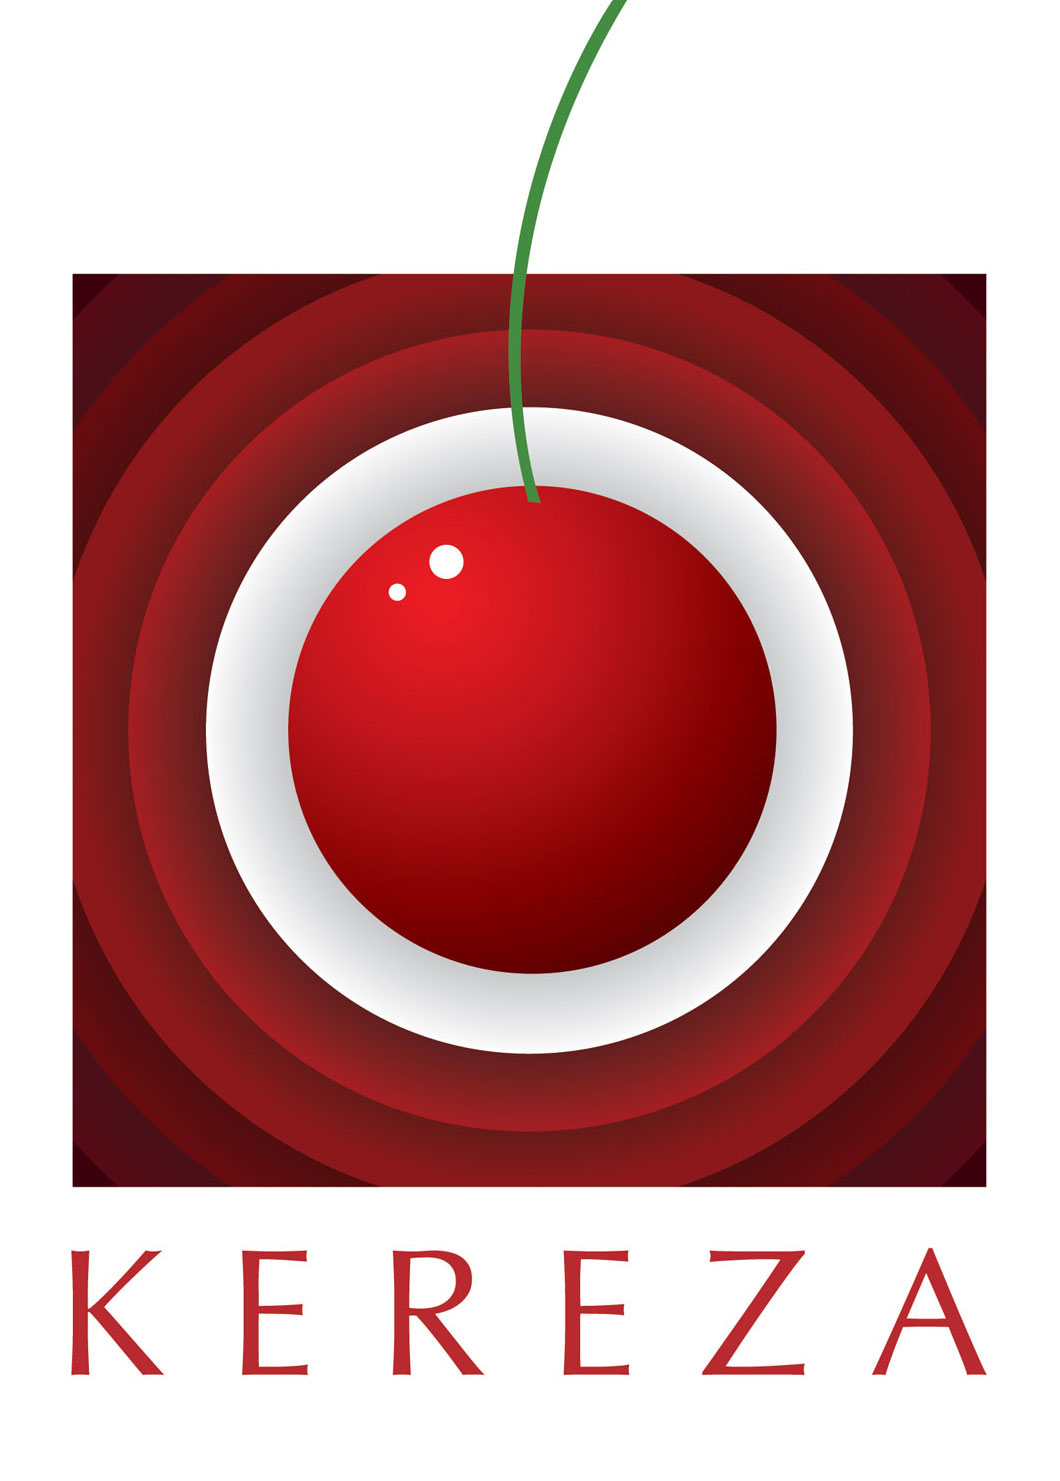 Kereza logo